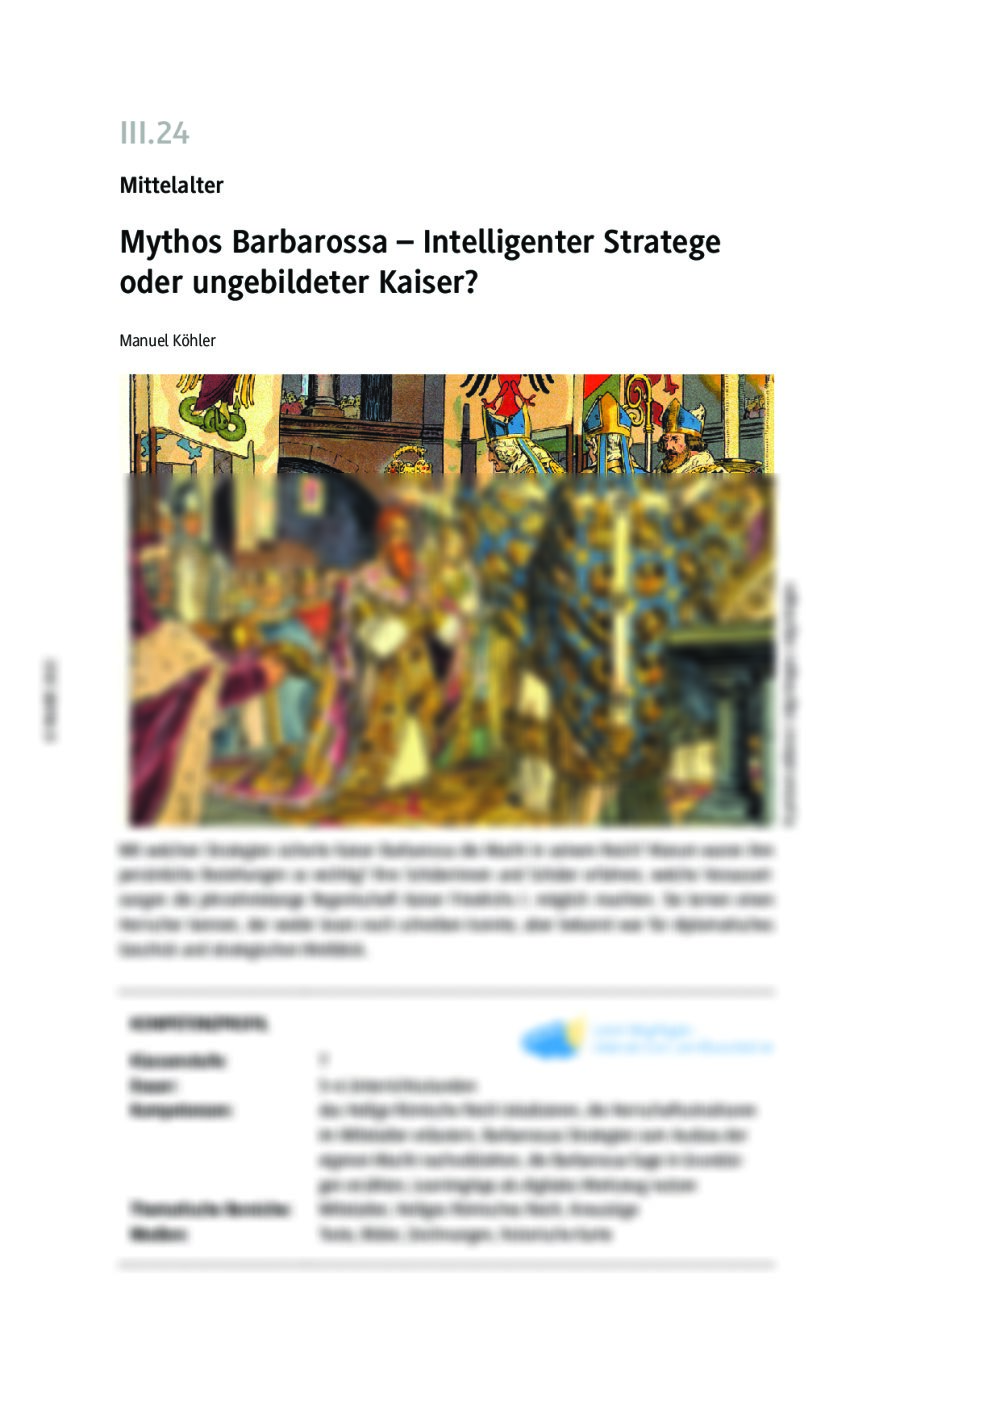 Mythos Barbarossa - Seite 1